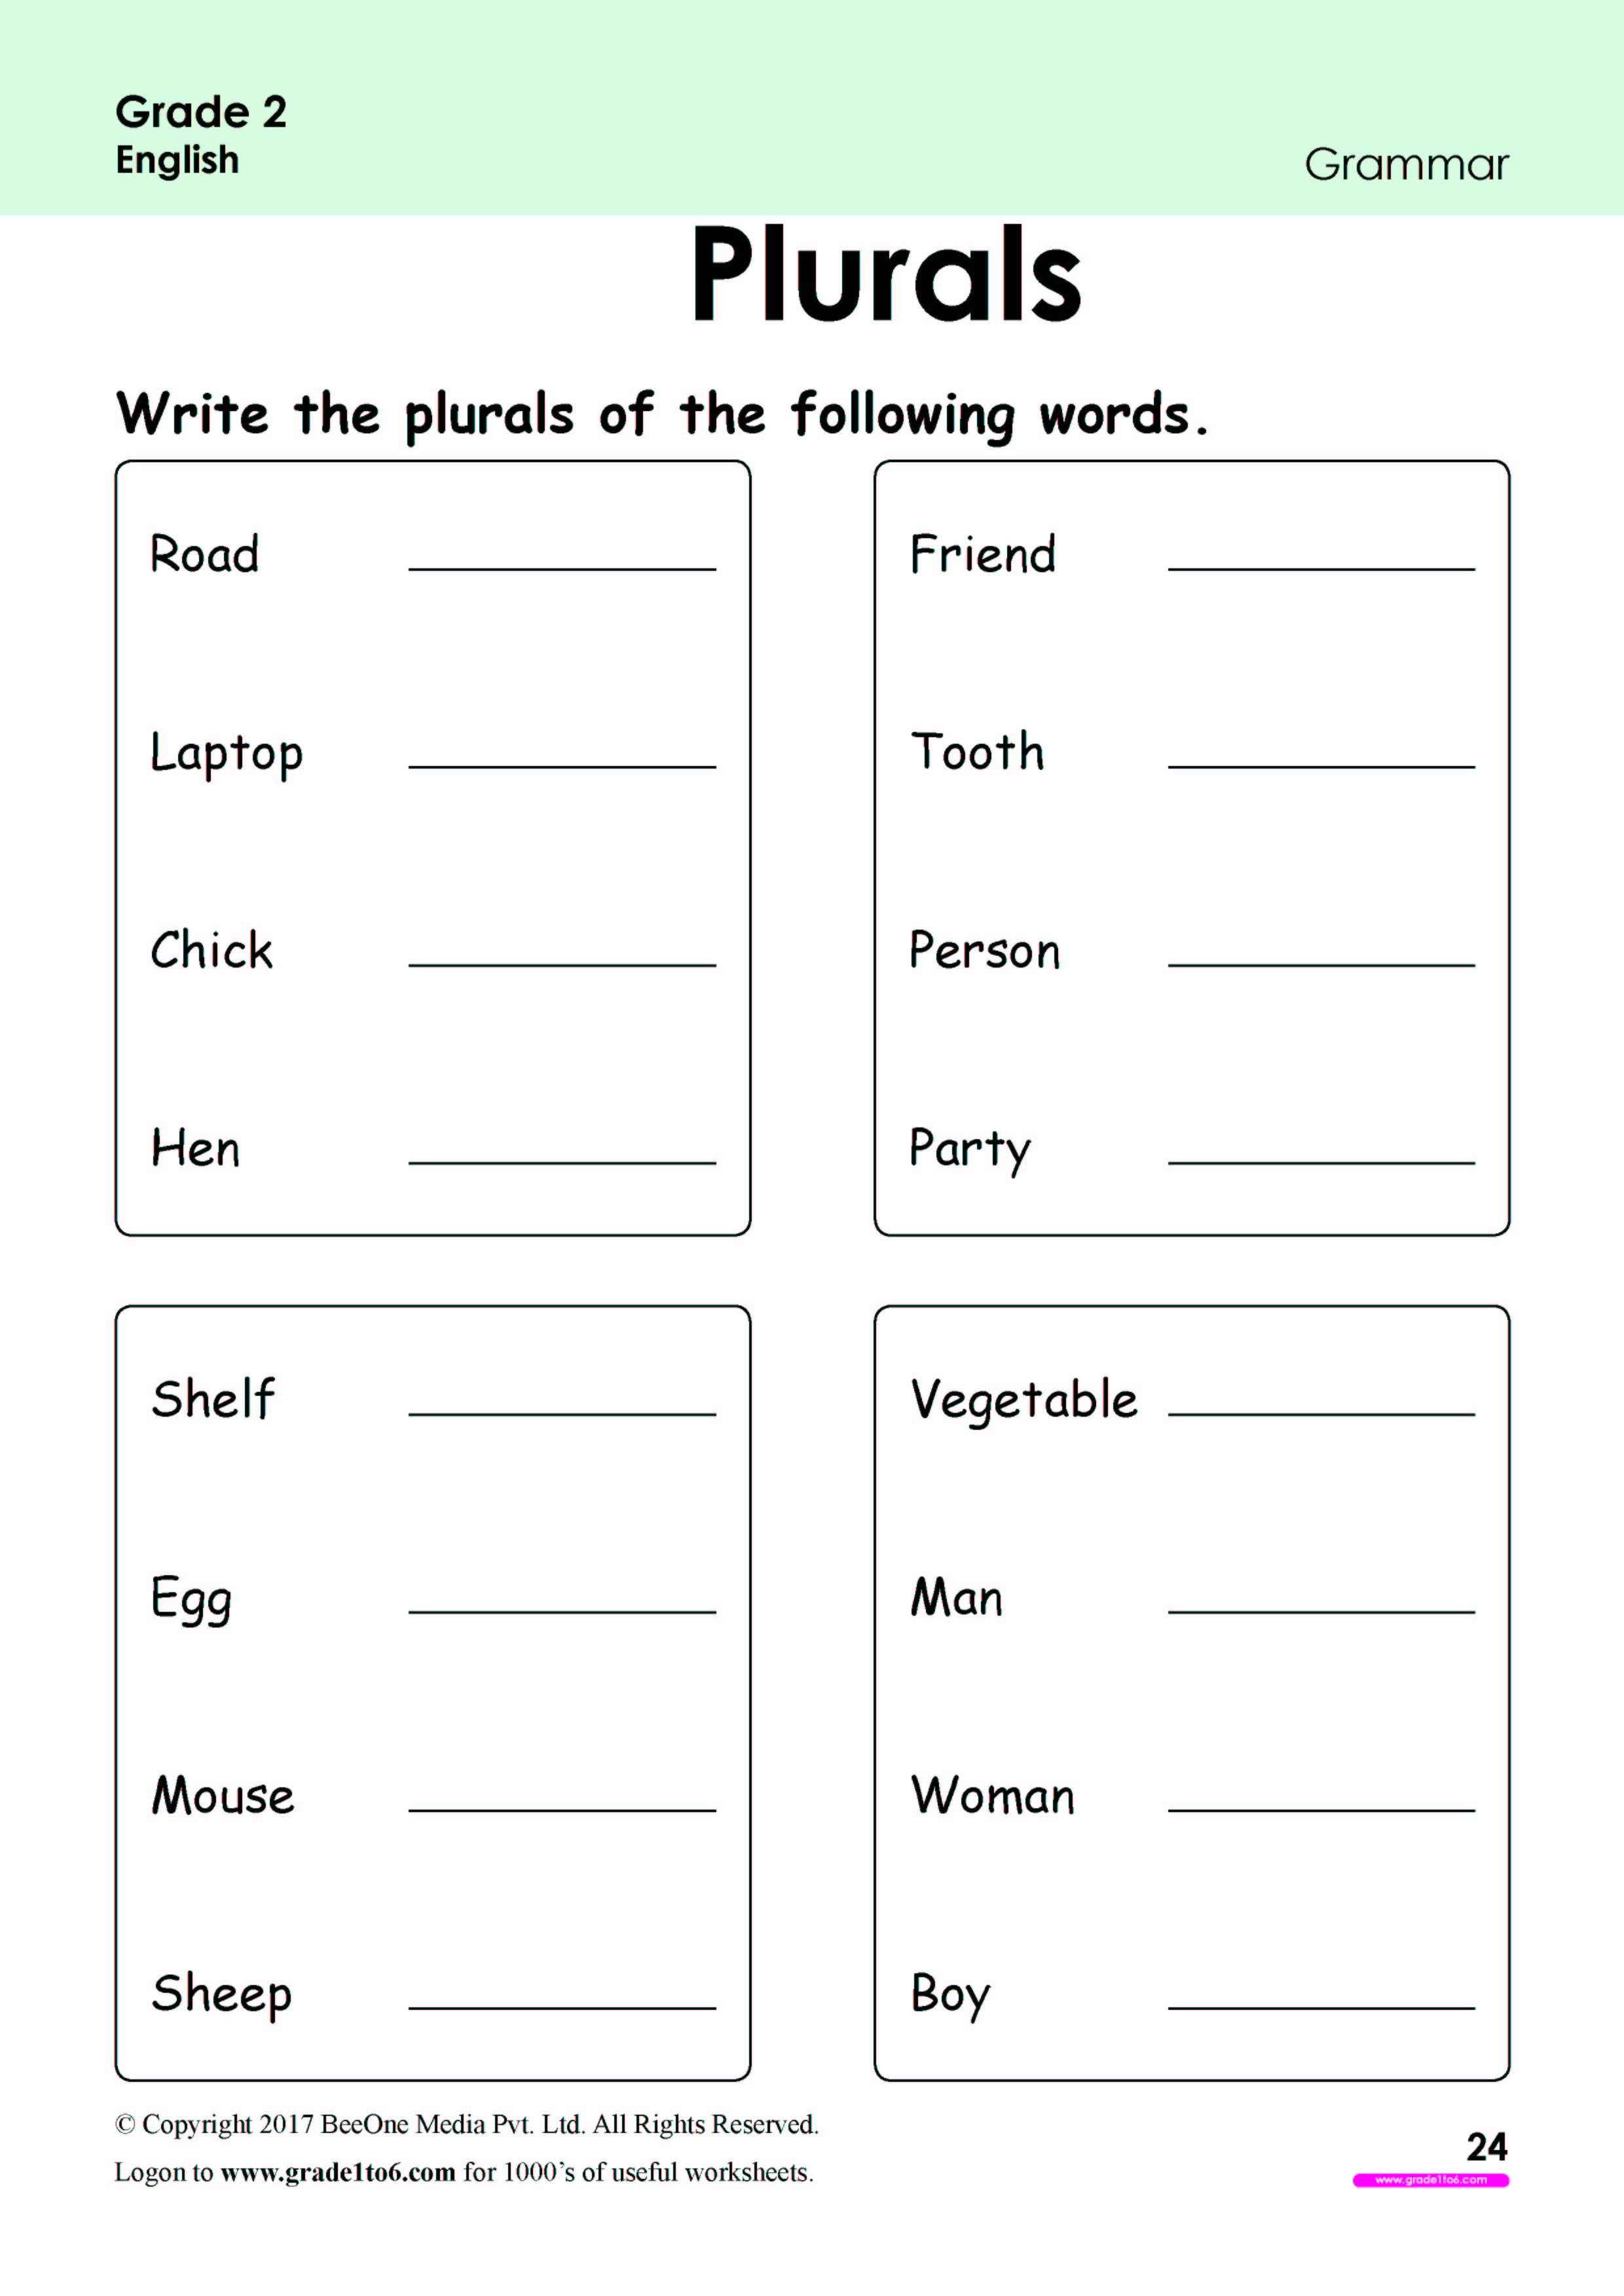 singular-and-plural-nouns-worksheet-www-grade1to6